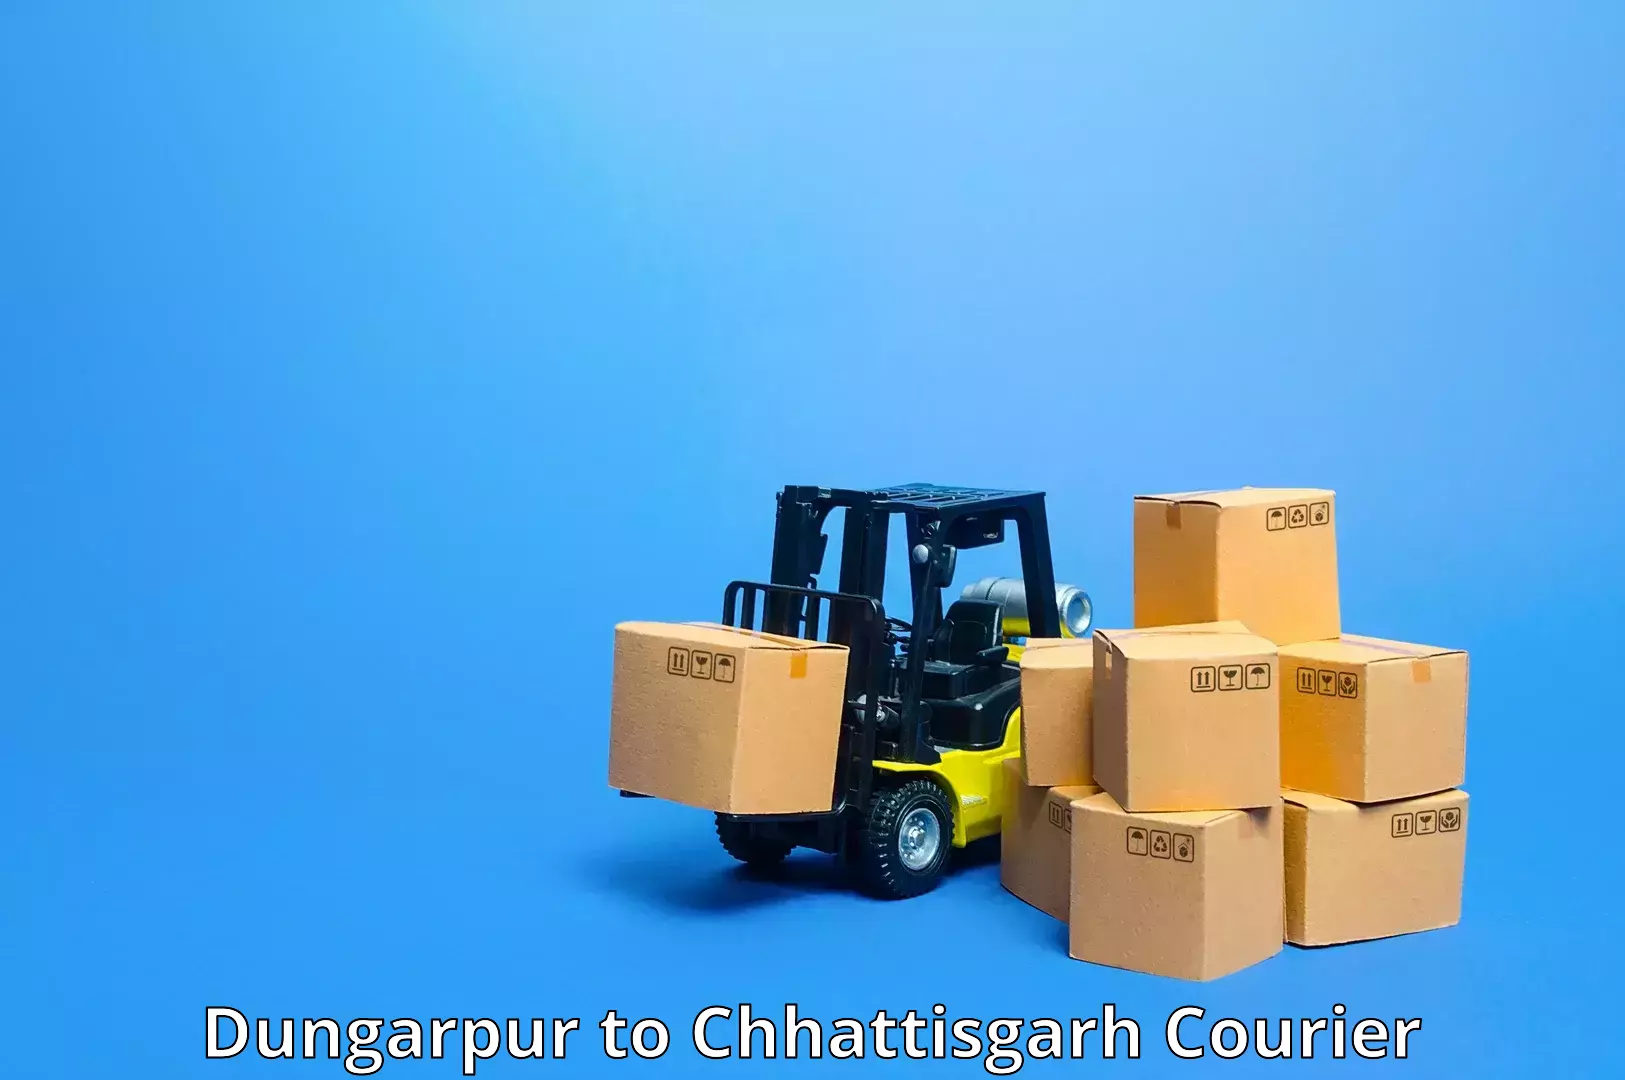 Efficient order fulfillment Dungarpur to Patna Chhattisgarh